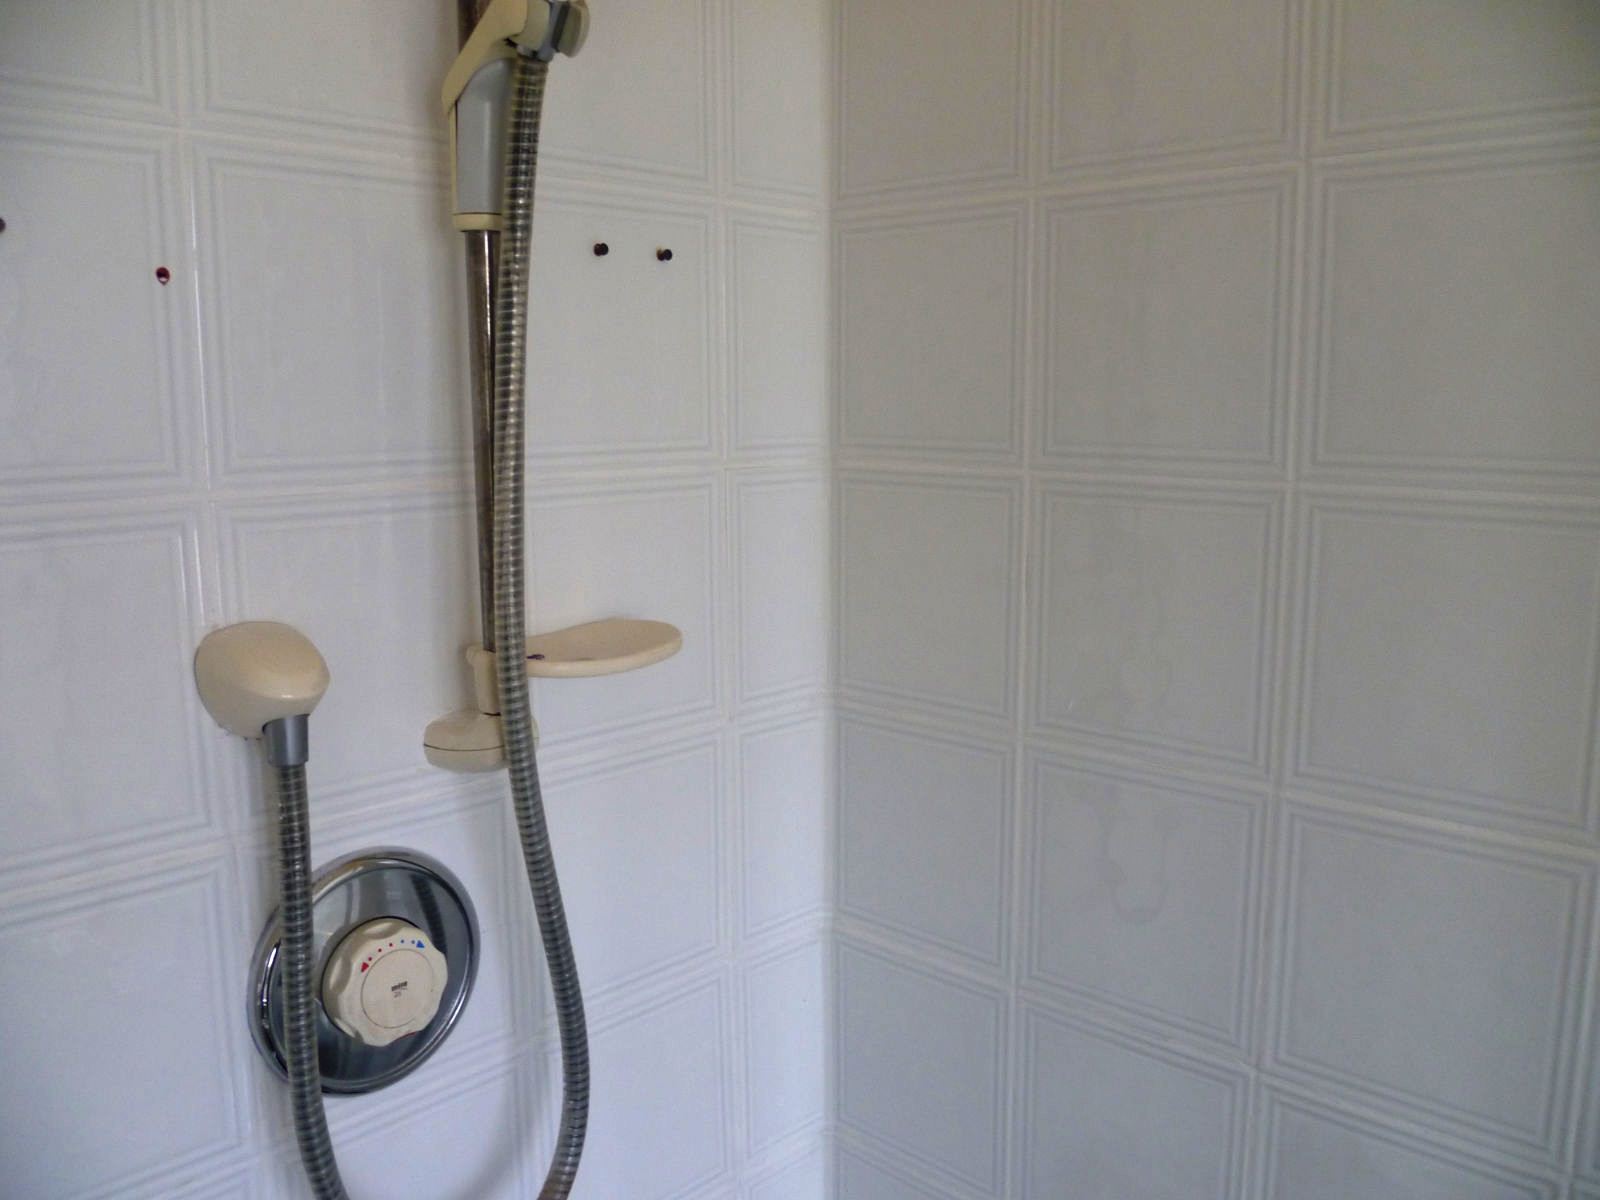 Gruby Ceramic Tiled Shower In Bishopton After 238 